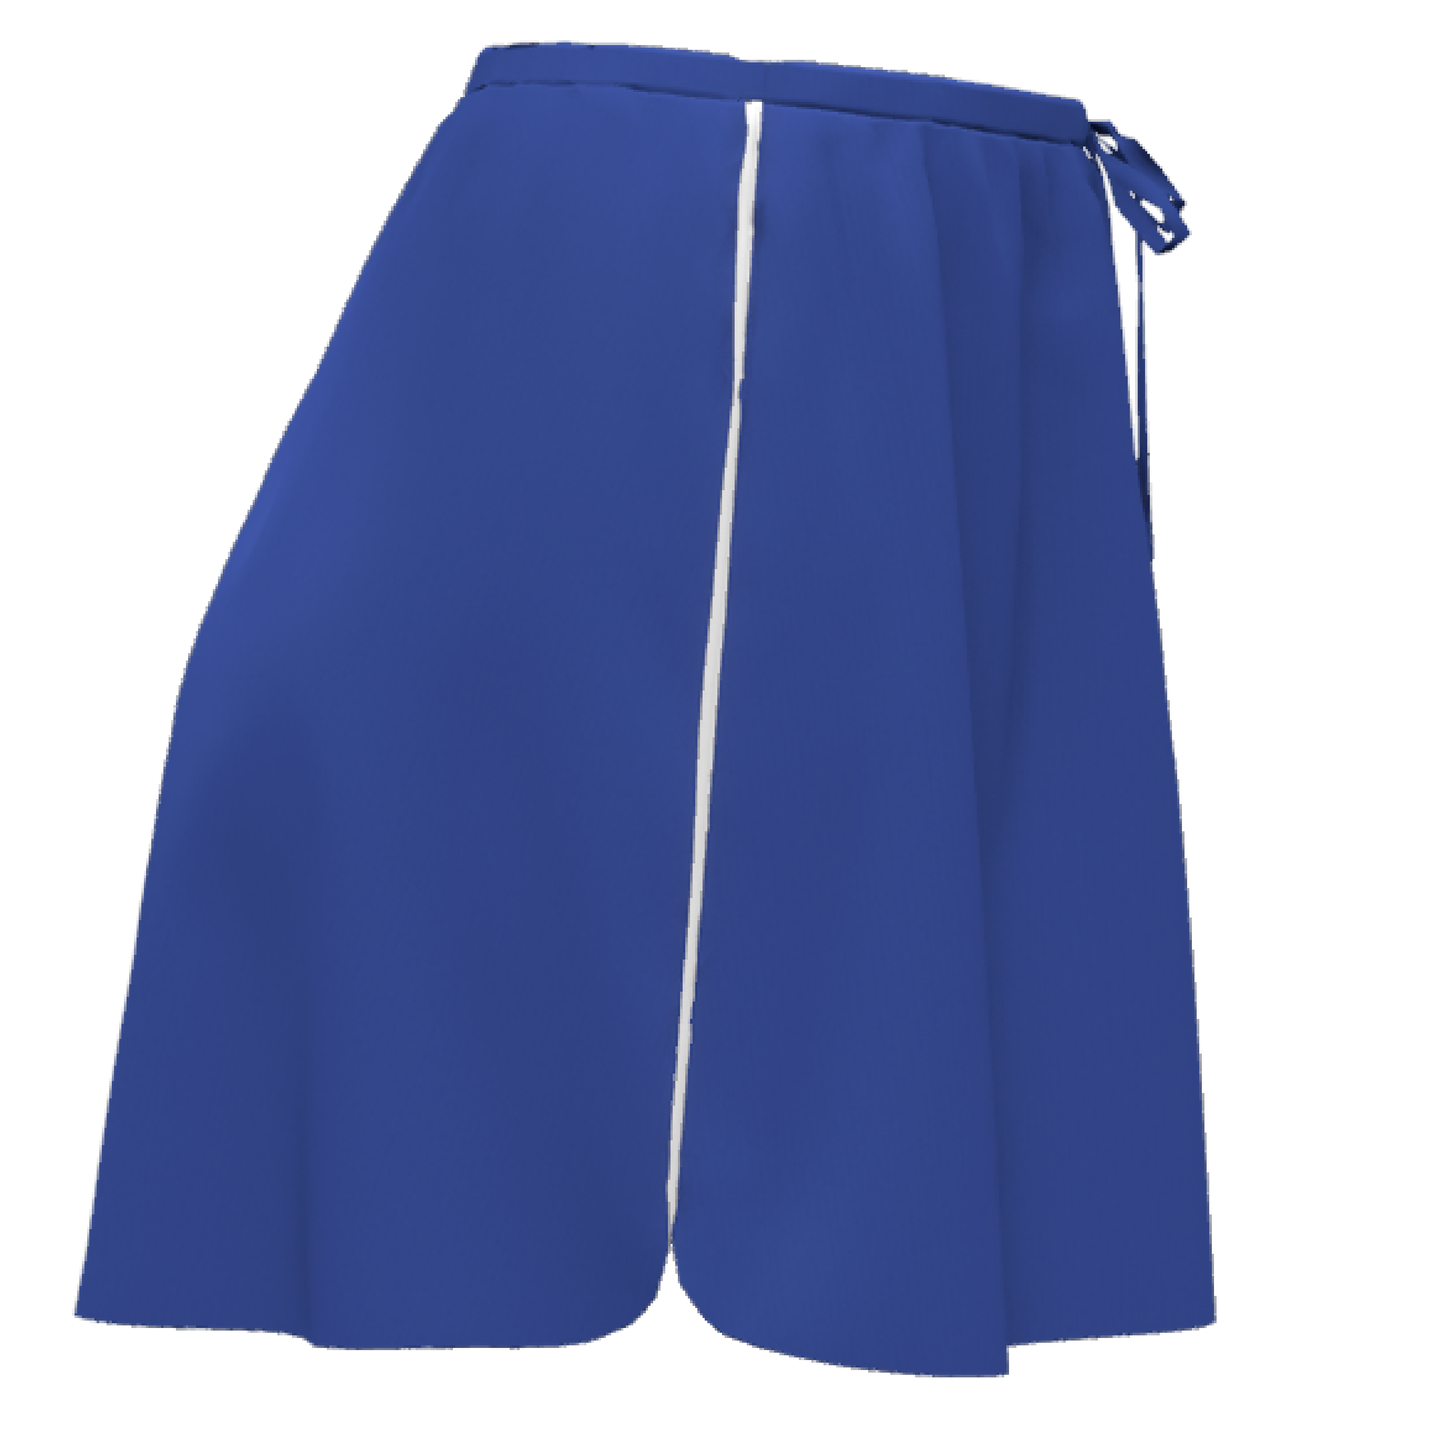 Taylor Pocket Skirt: Karma Blue